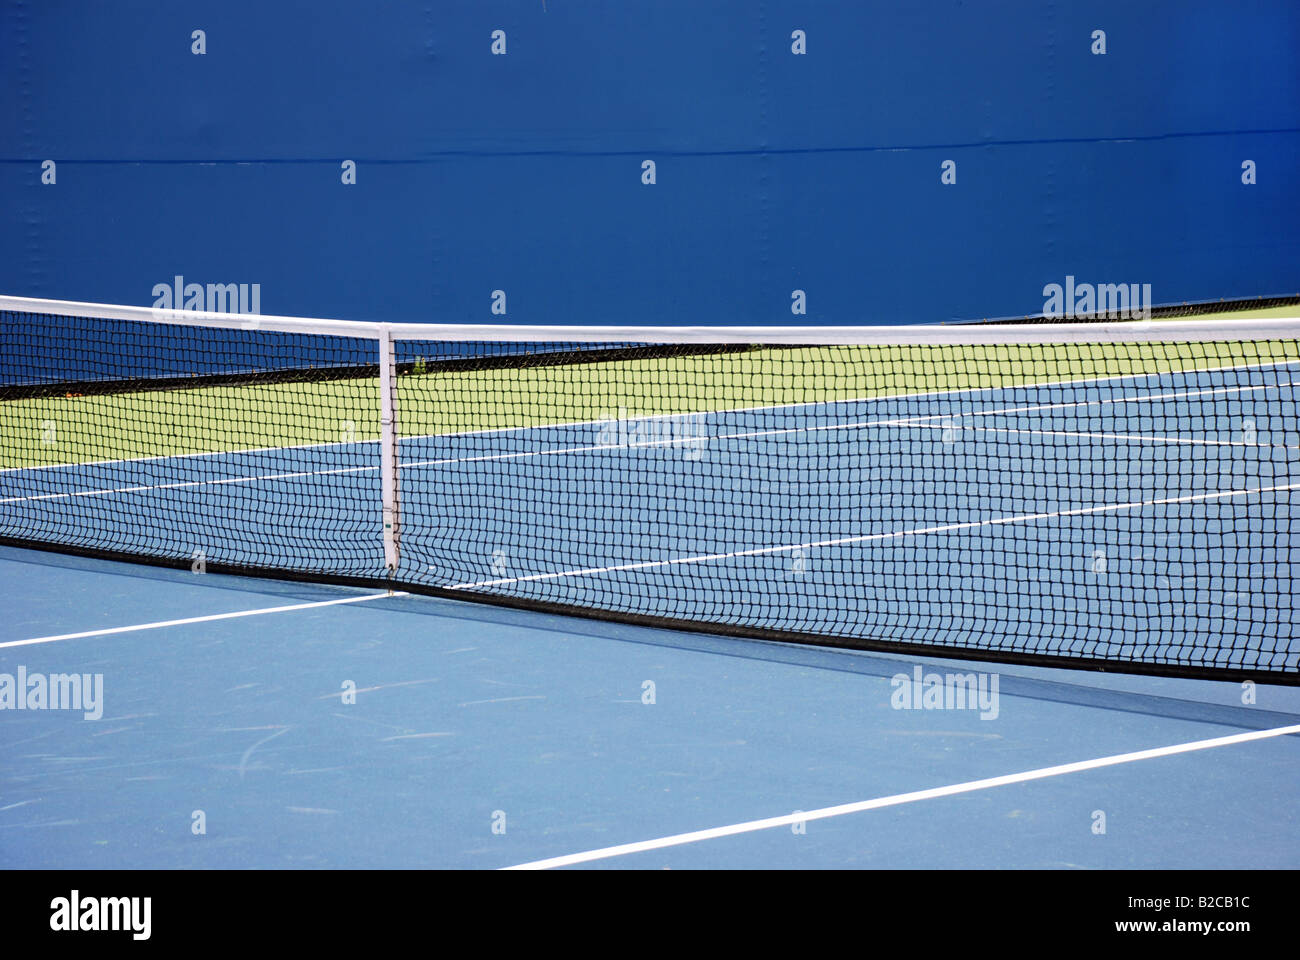 Tennis hard court Stock Photo